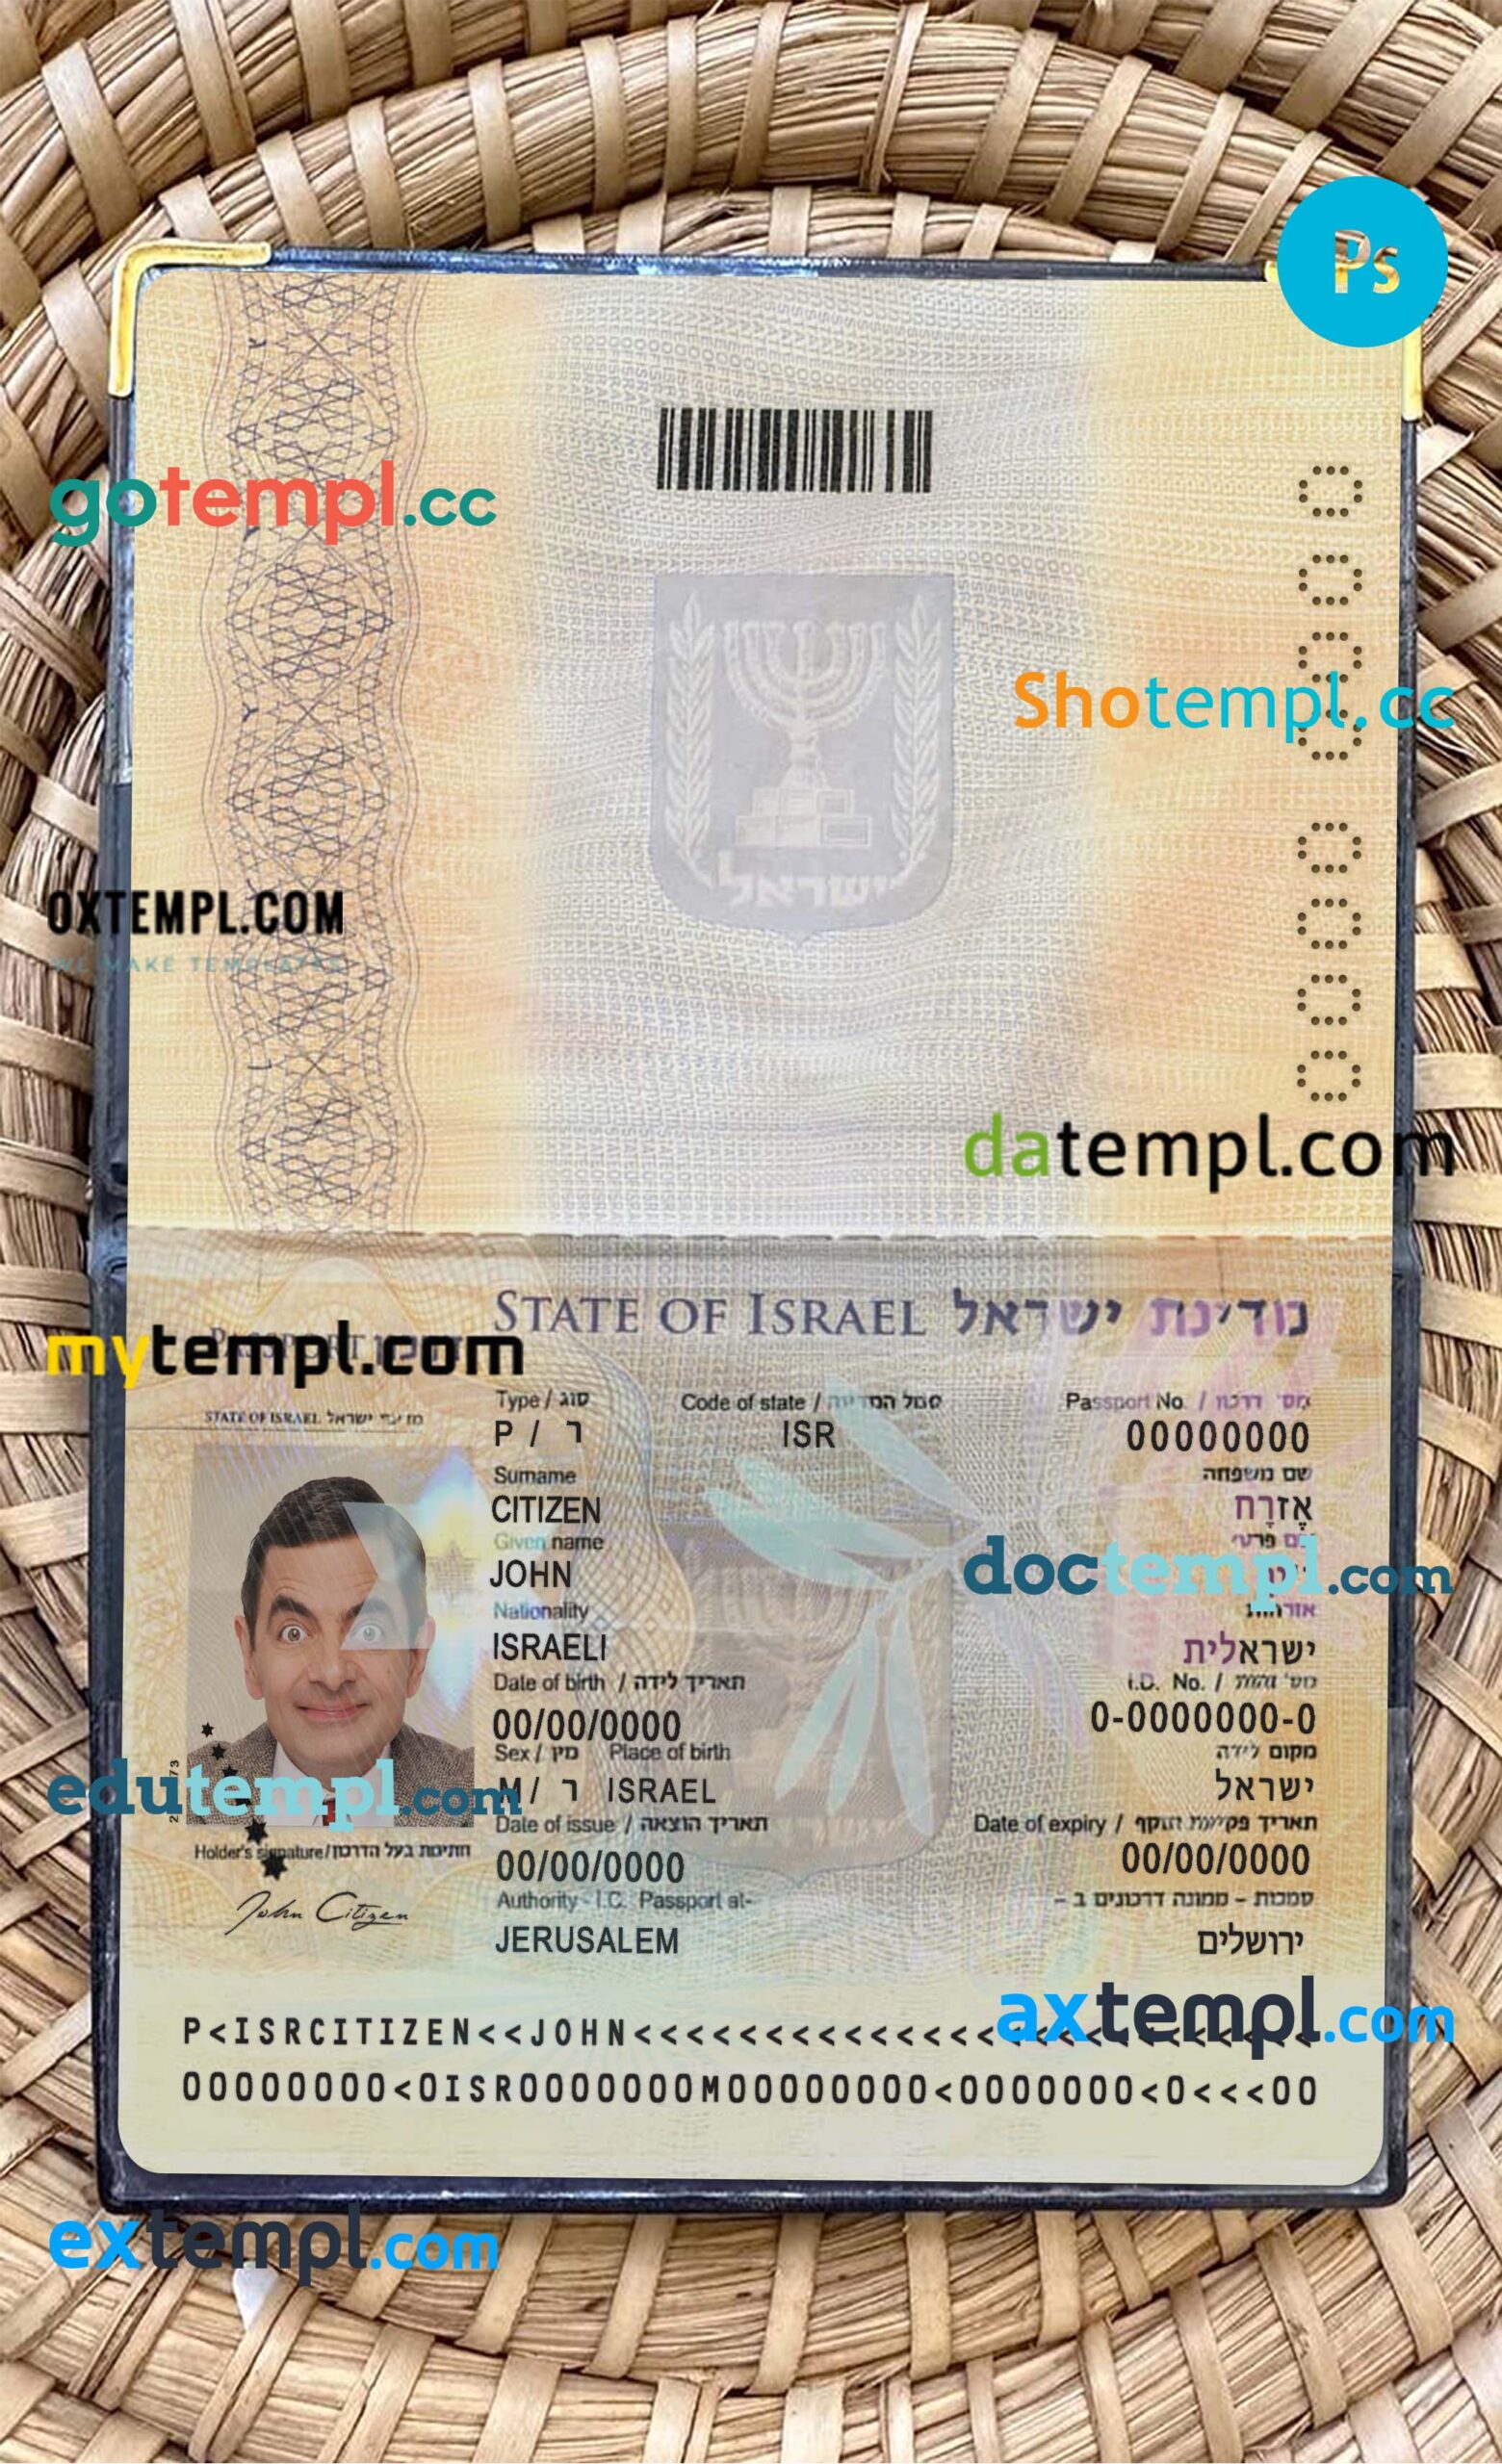 Canada Nova Scotia driving license template in PSD format